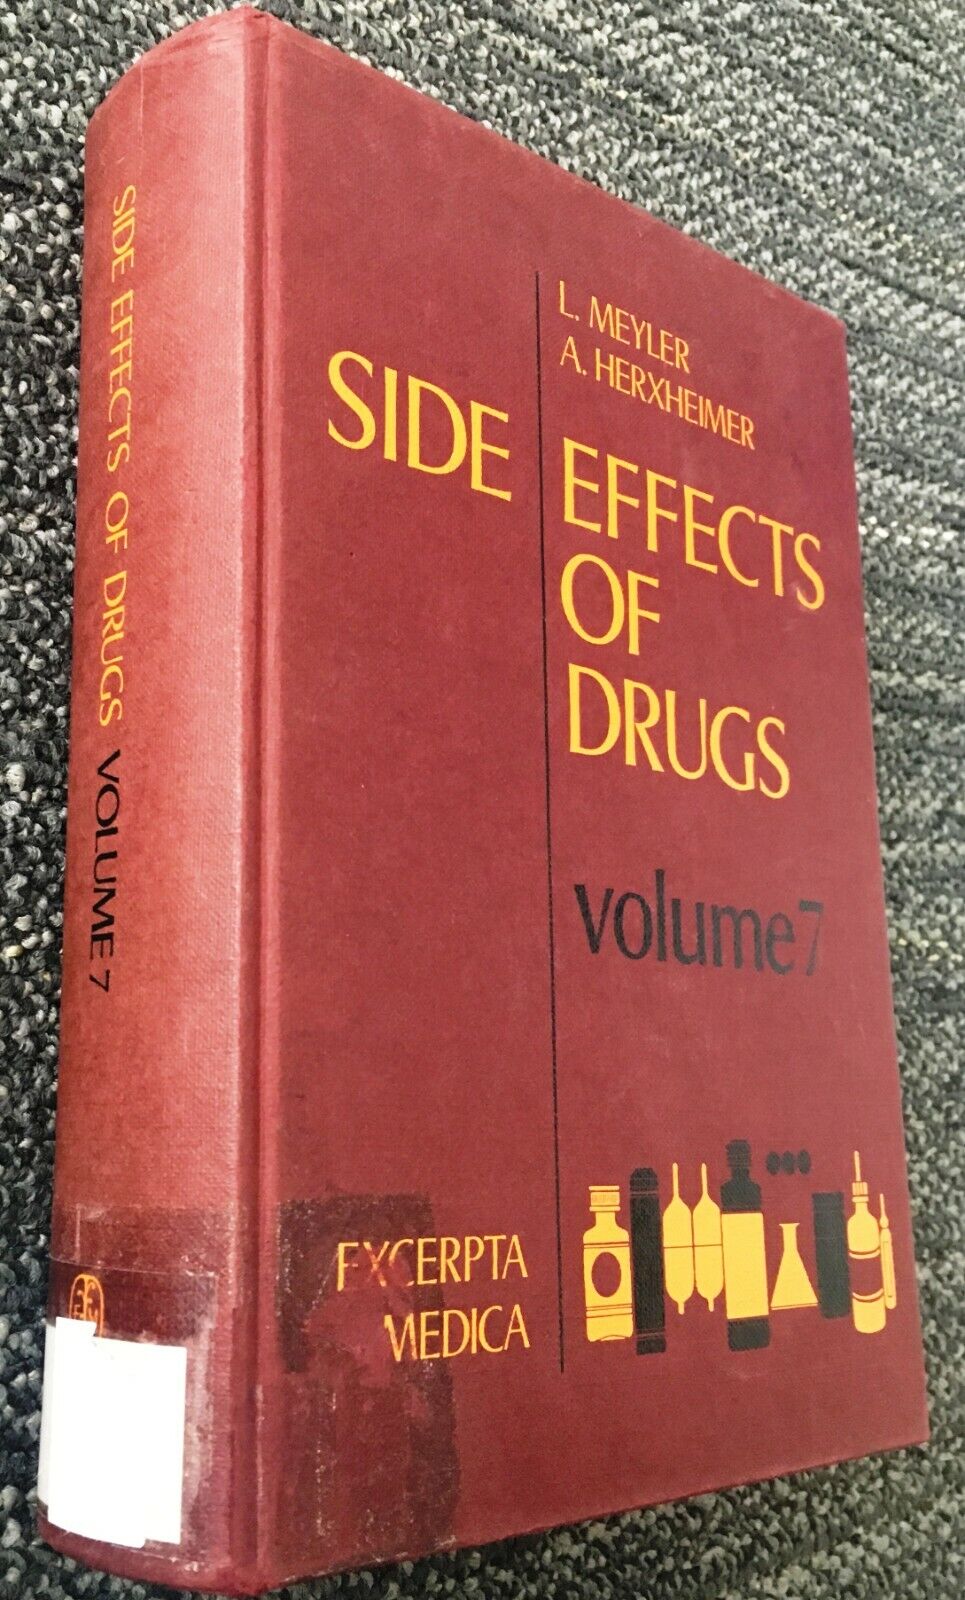 Side Effects of Drugs Volume 7 Meyler Herxheimer 1972 Survey of Unwanted Effects